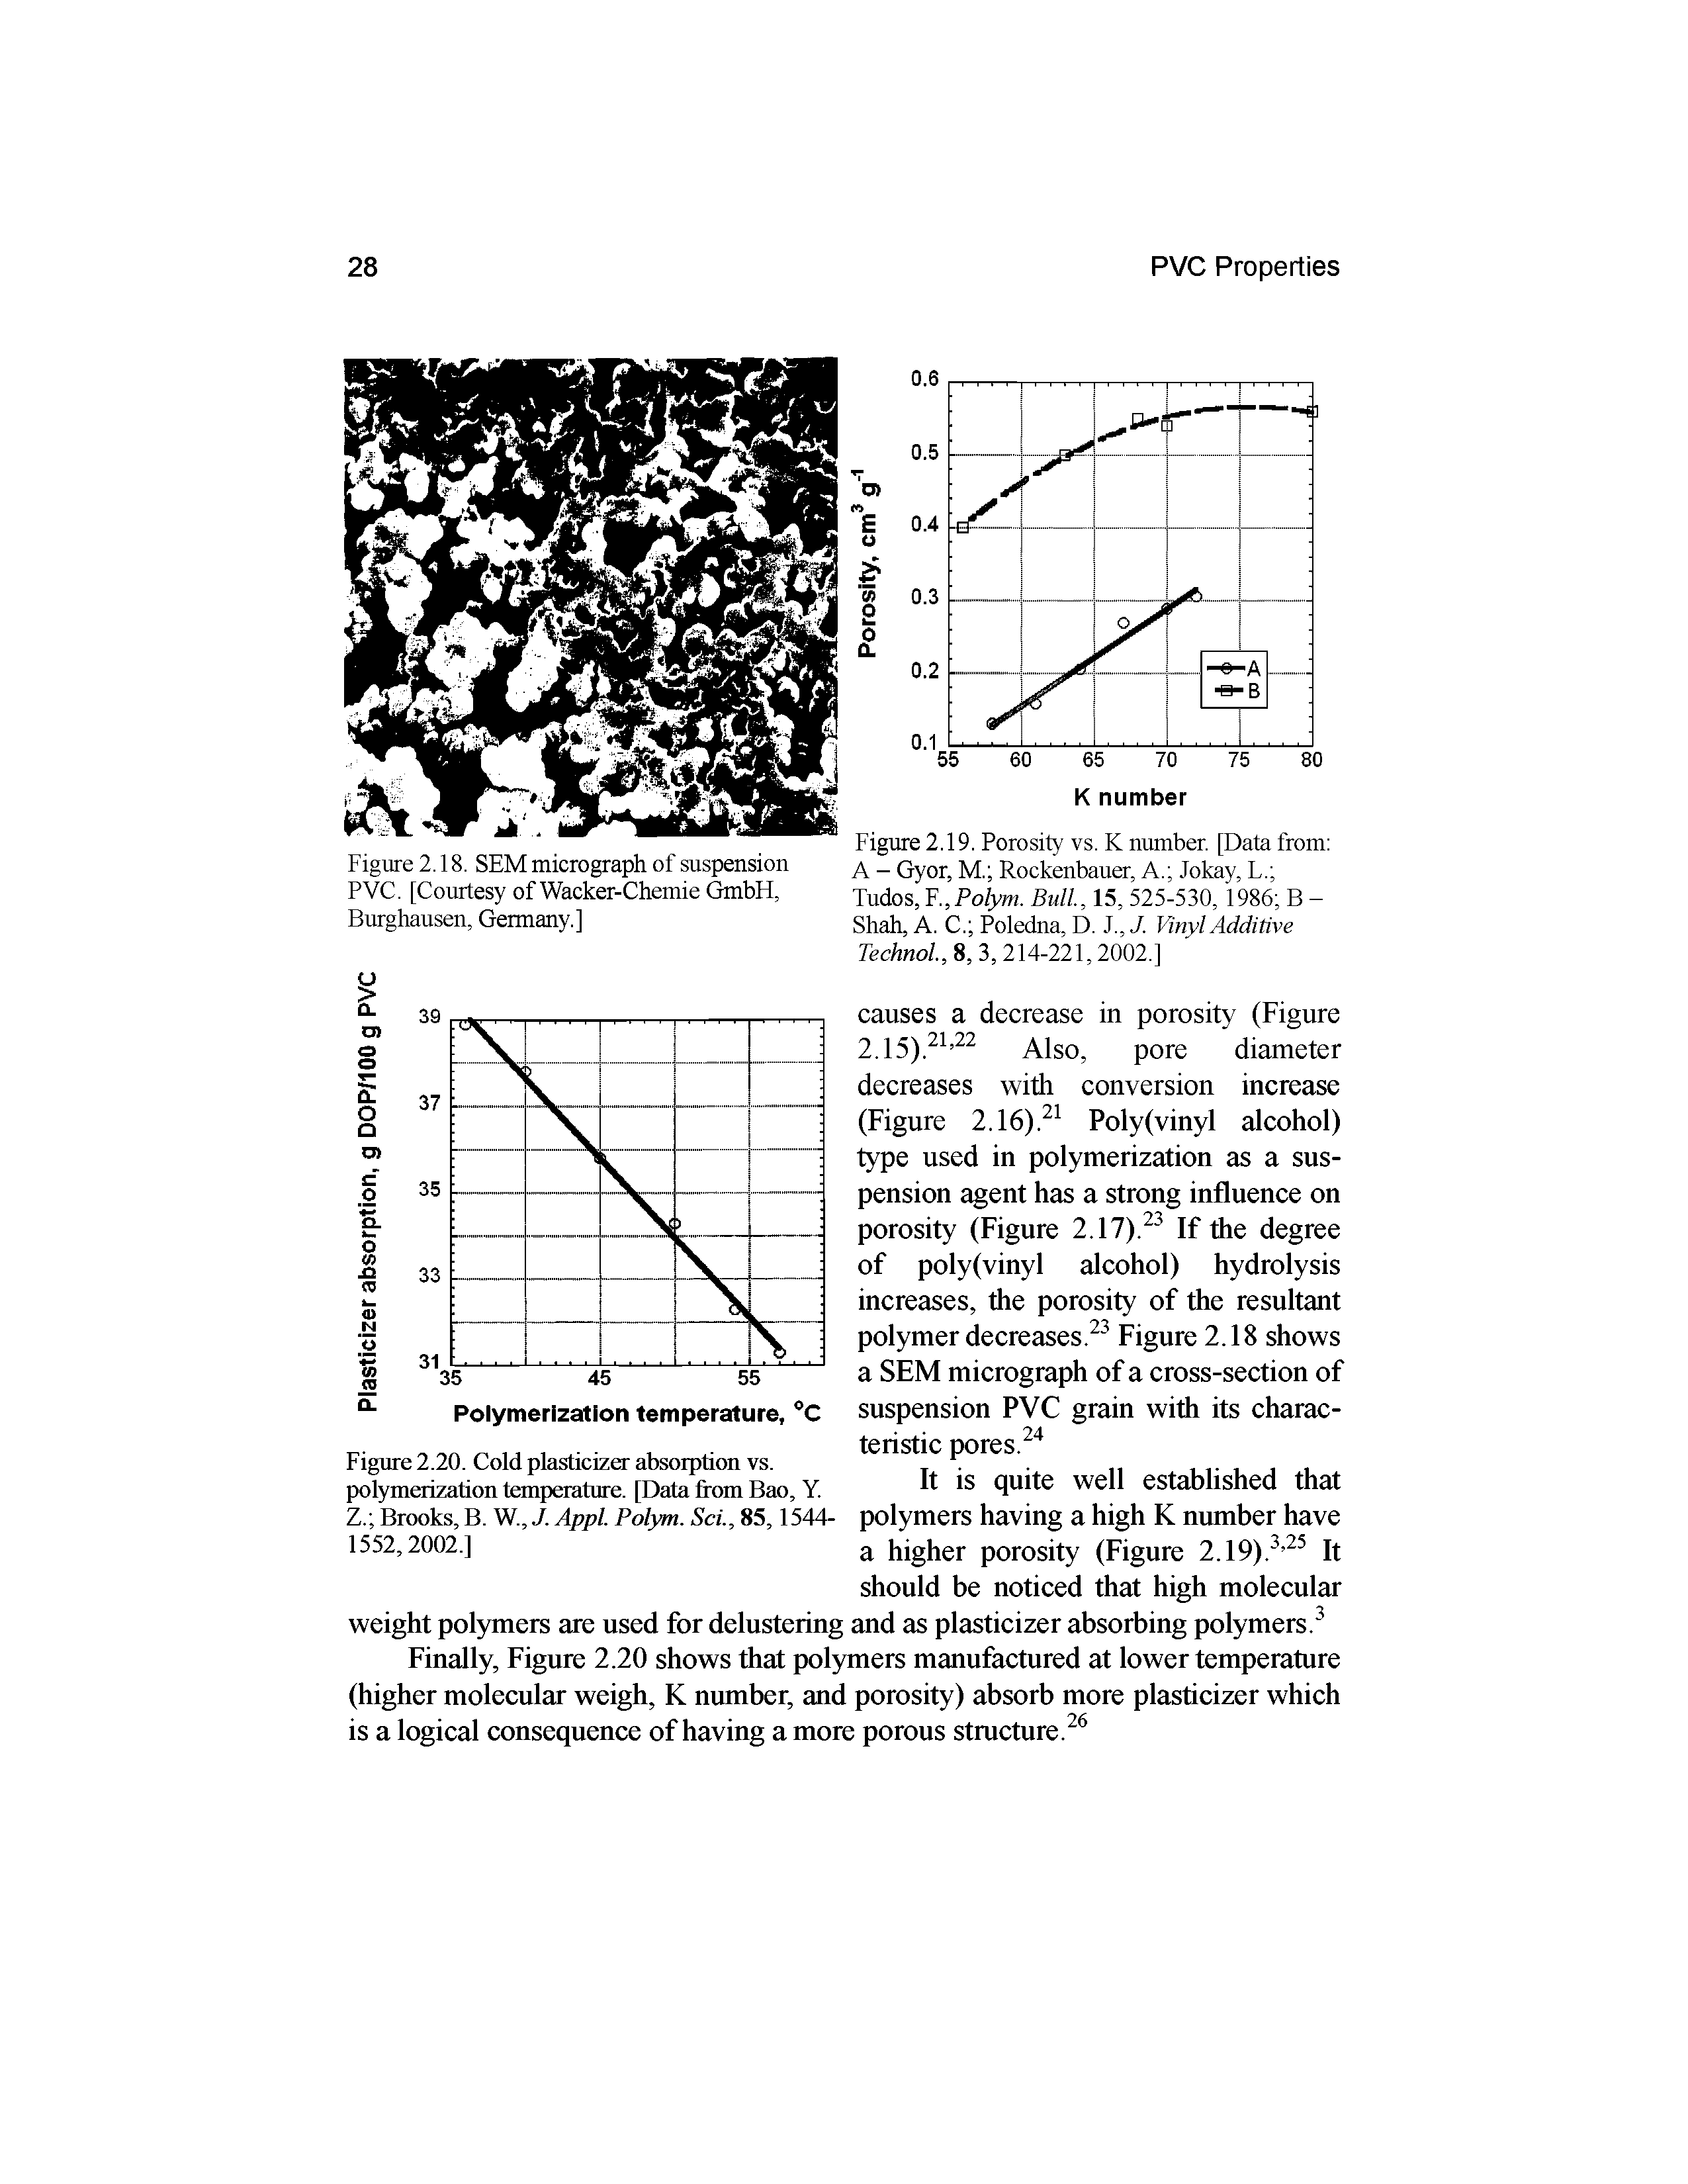 Figure 2.20. Cold plasticizer absorption vs. polymerization temperature. [Data from Bao, Y. Z. Brooks, B. Vi.,J.Appl. Polym. Set, 85,1544-1552,2002.]...